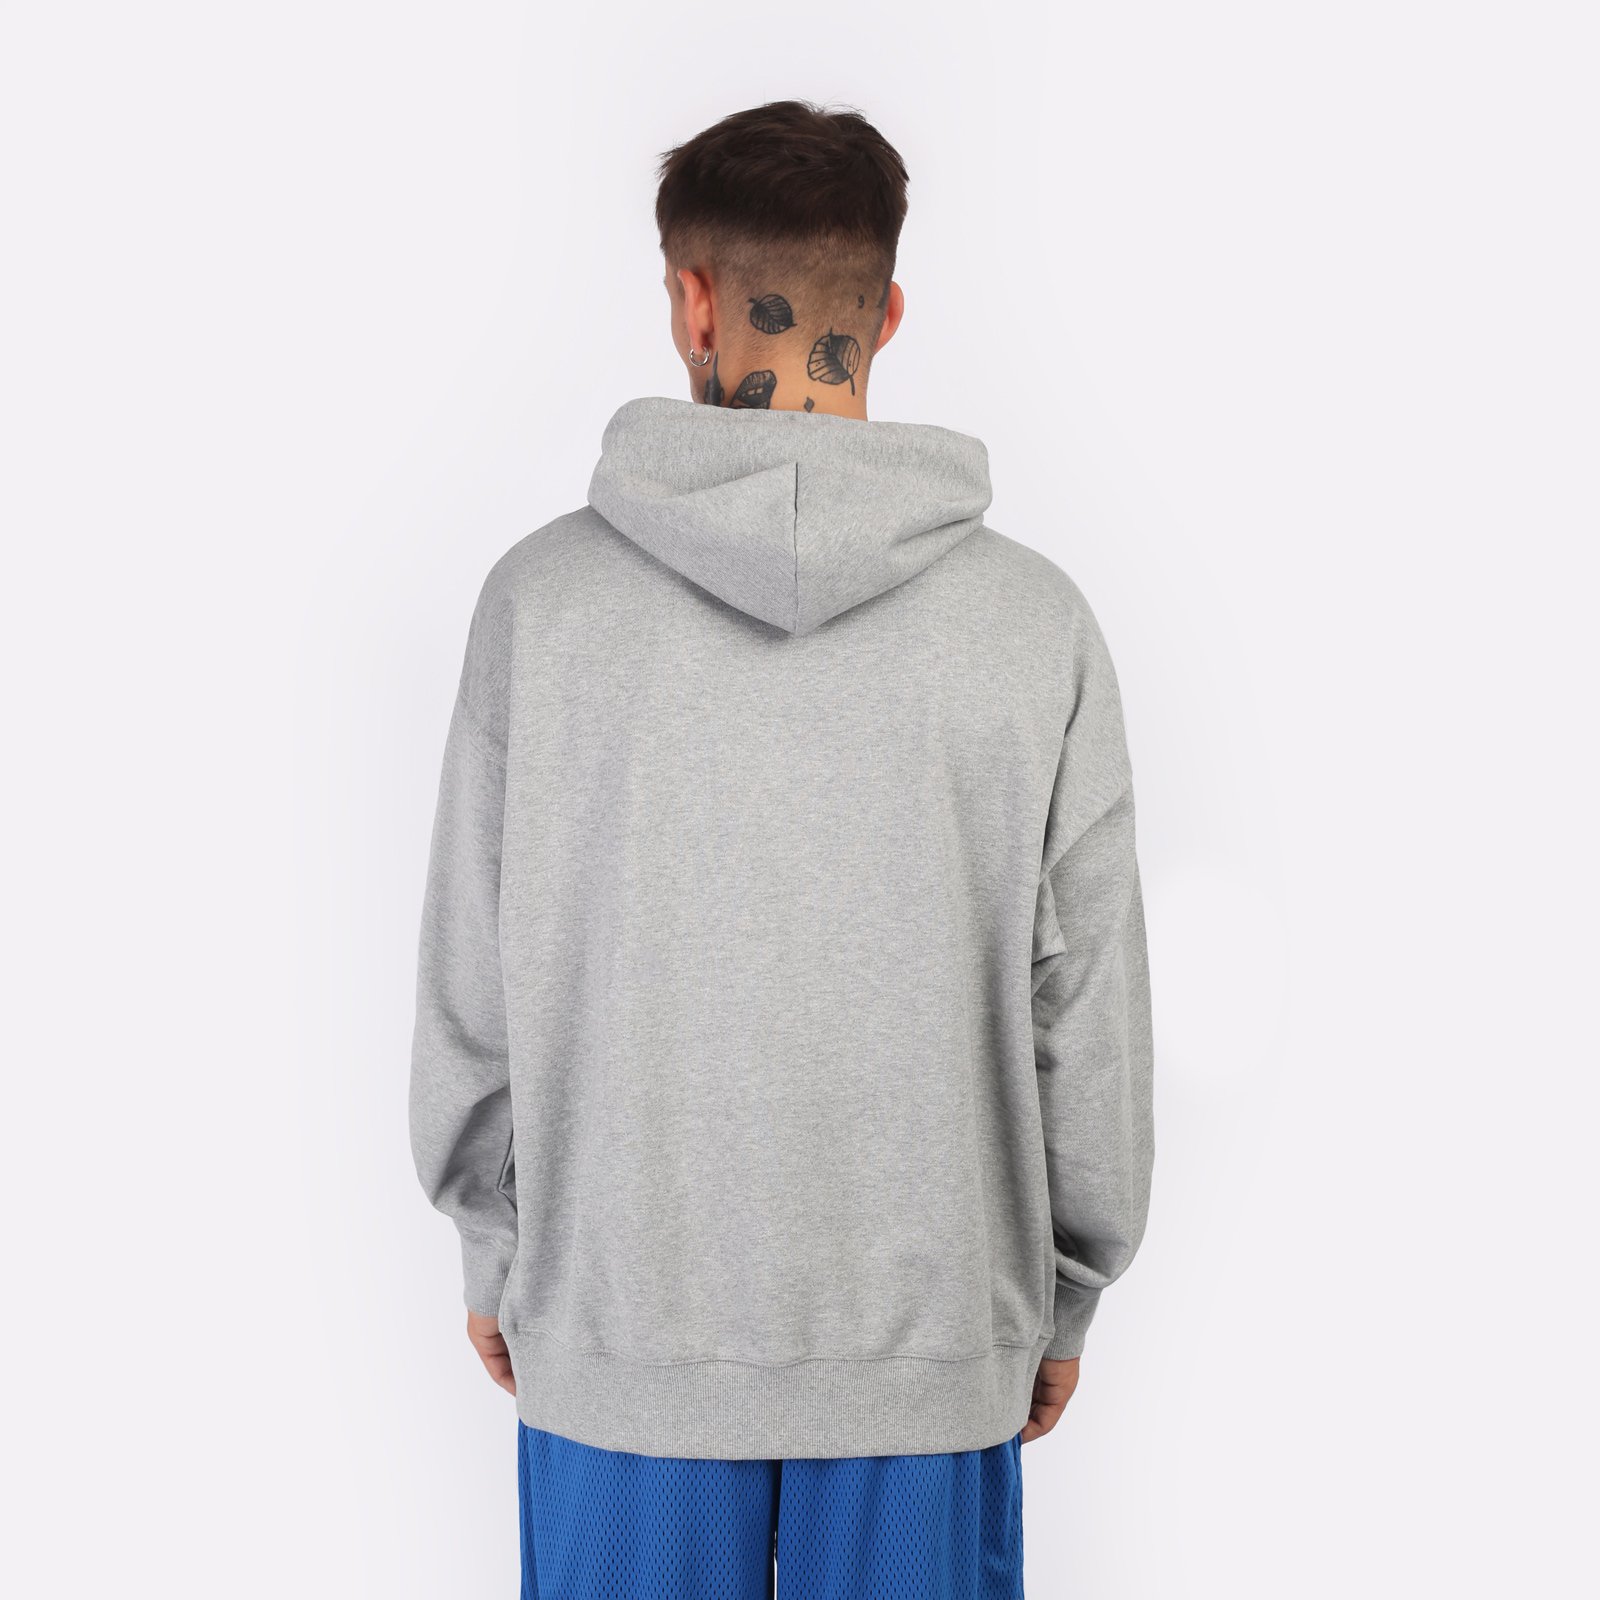 Мужская толстовка PLAYGROUND Logo (Plgrnd-grey-hoodie)  - цена, описание, фото 2